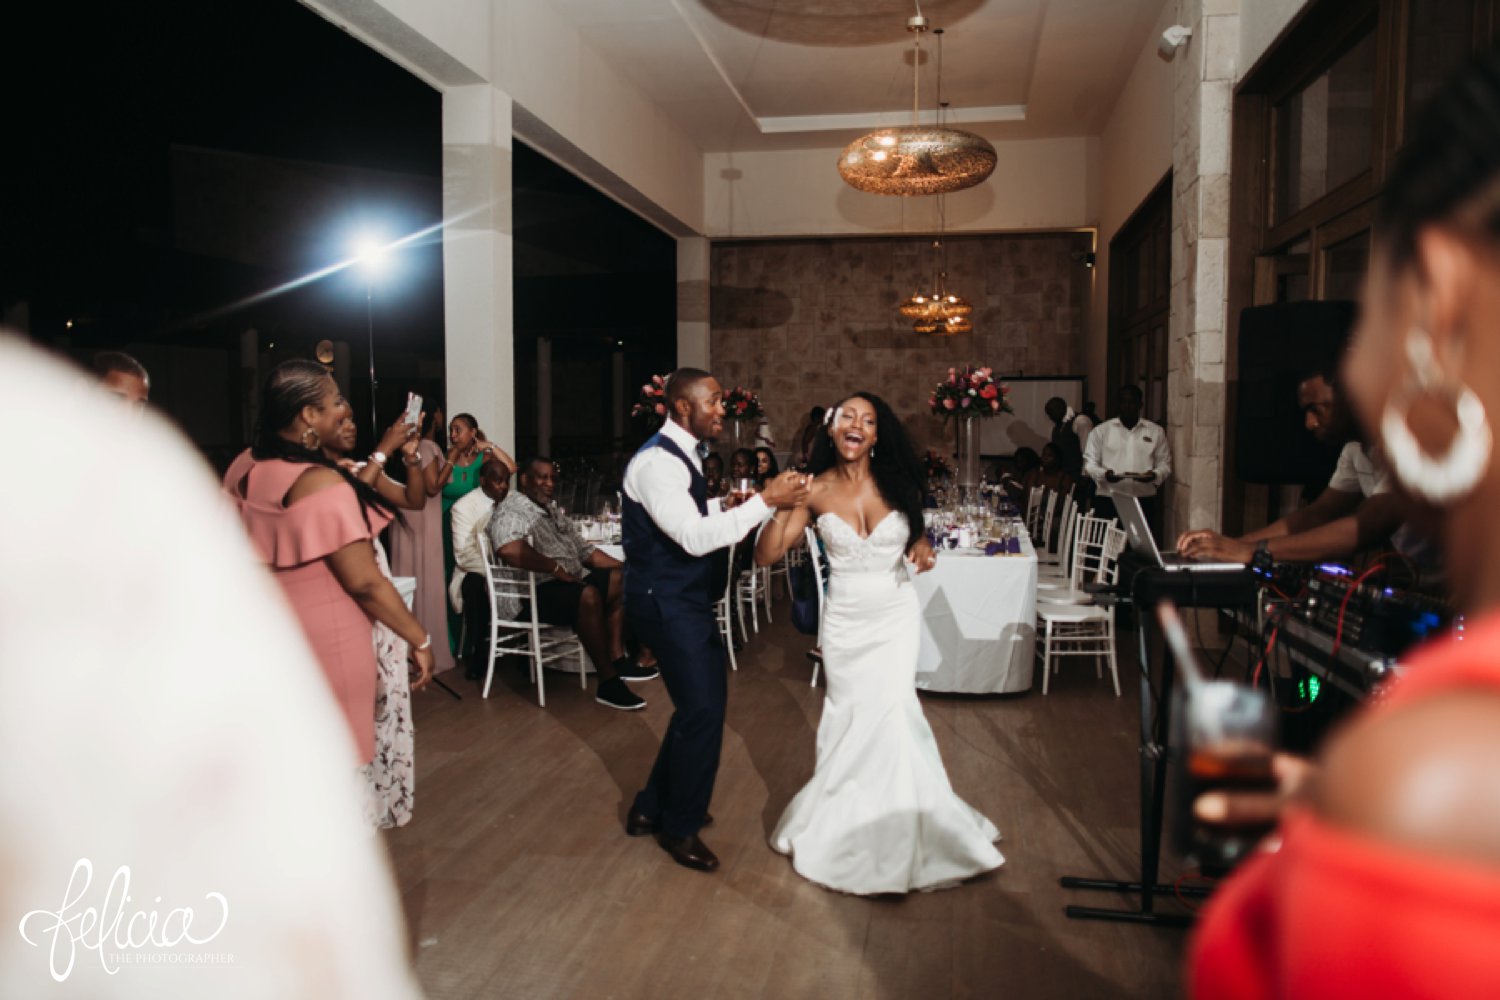   images by feliciathephotographer.com | destination wedding photographer | st lucia | l&s travel | the Royalton | reception | details | dance floor | party | family | laughter | joy | bride and groom |